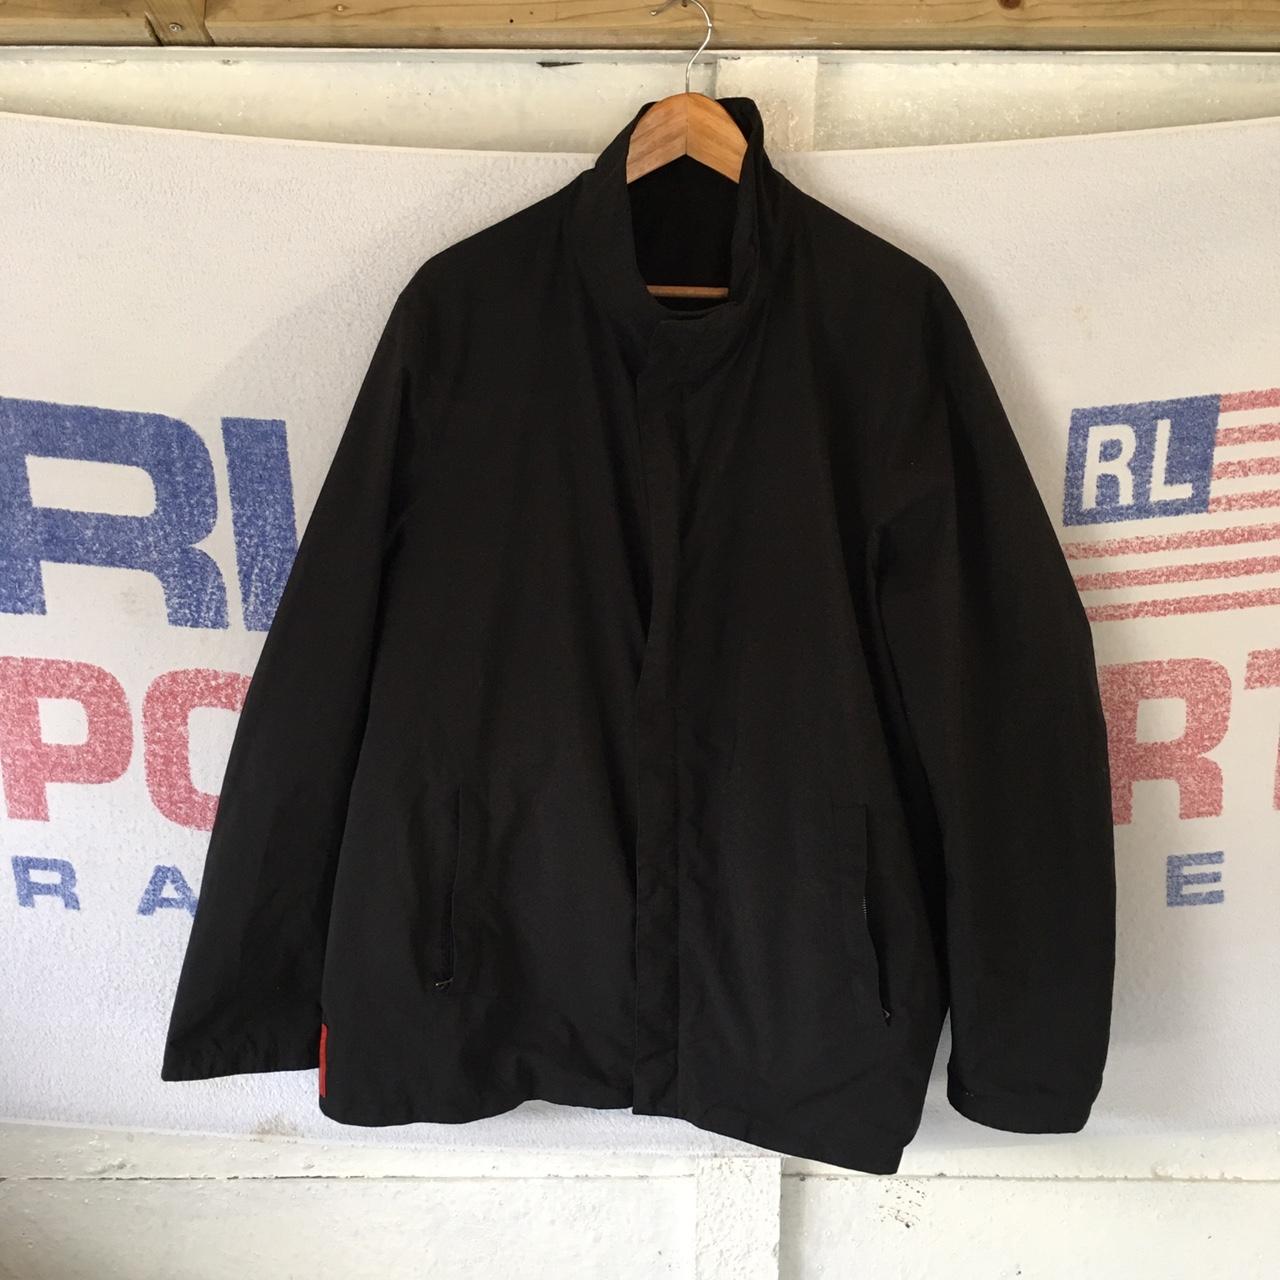 Sick 90s/early 2000s Prada sport reversible jacket